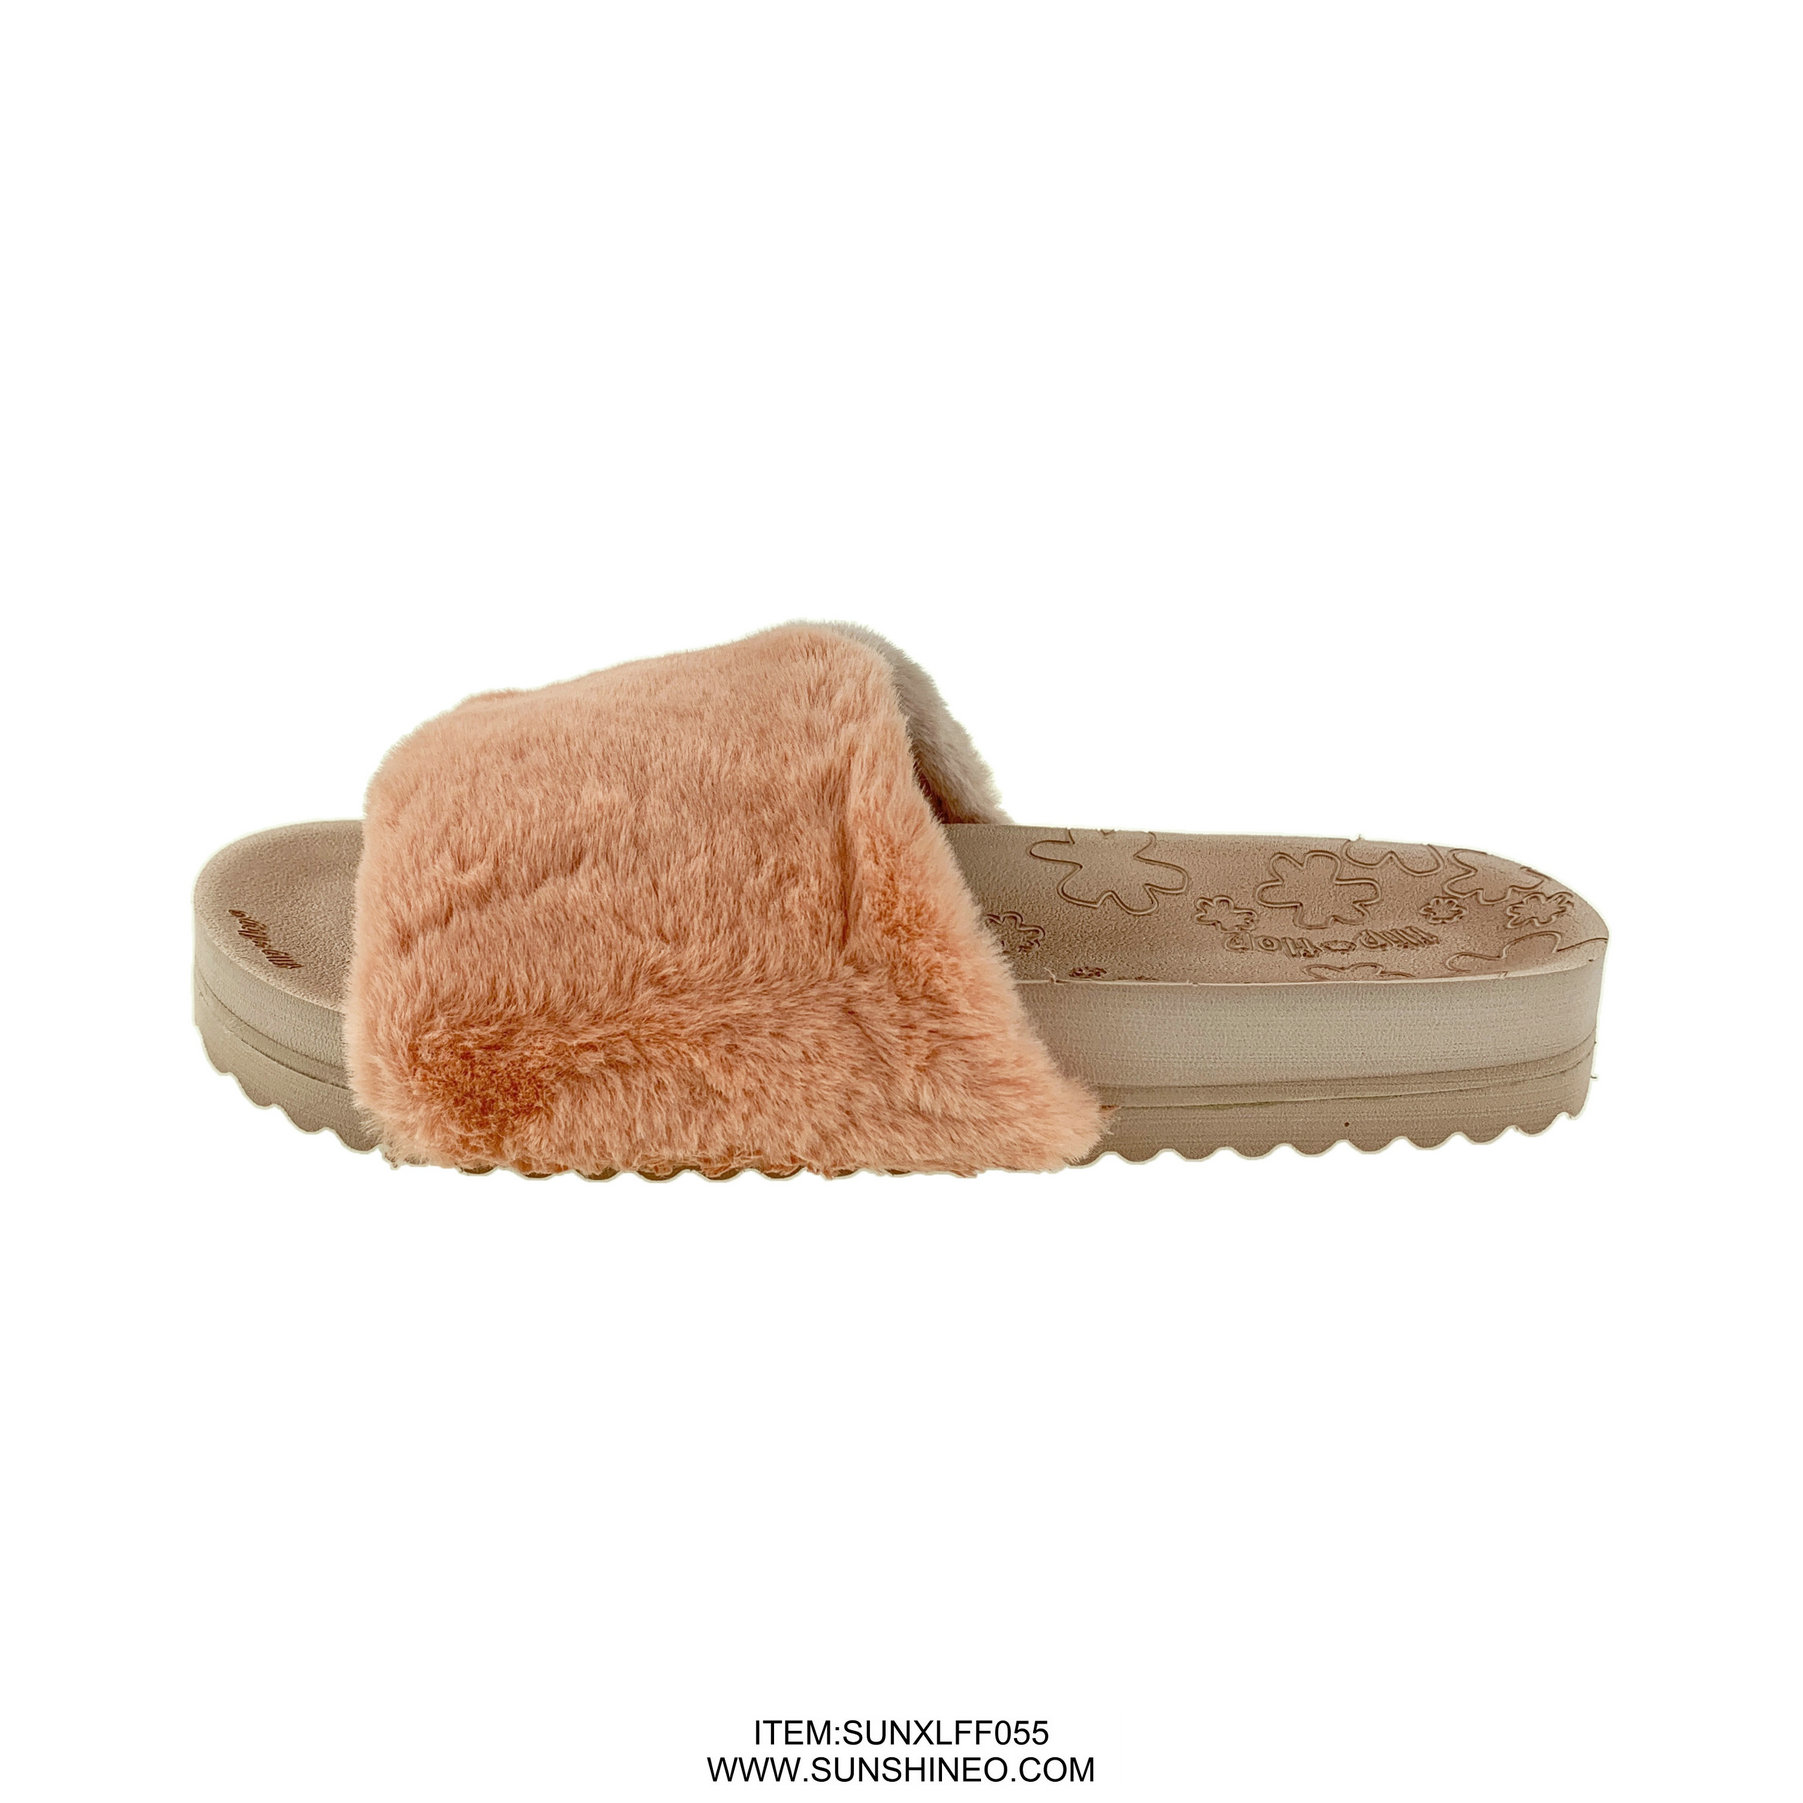 SUNXLFF055 fur flip flop sandals winter slippers